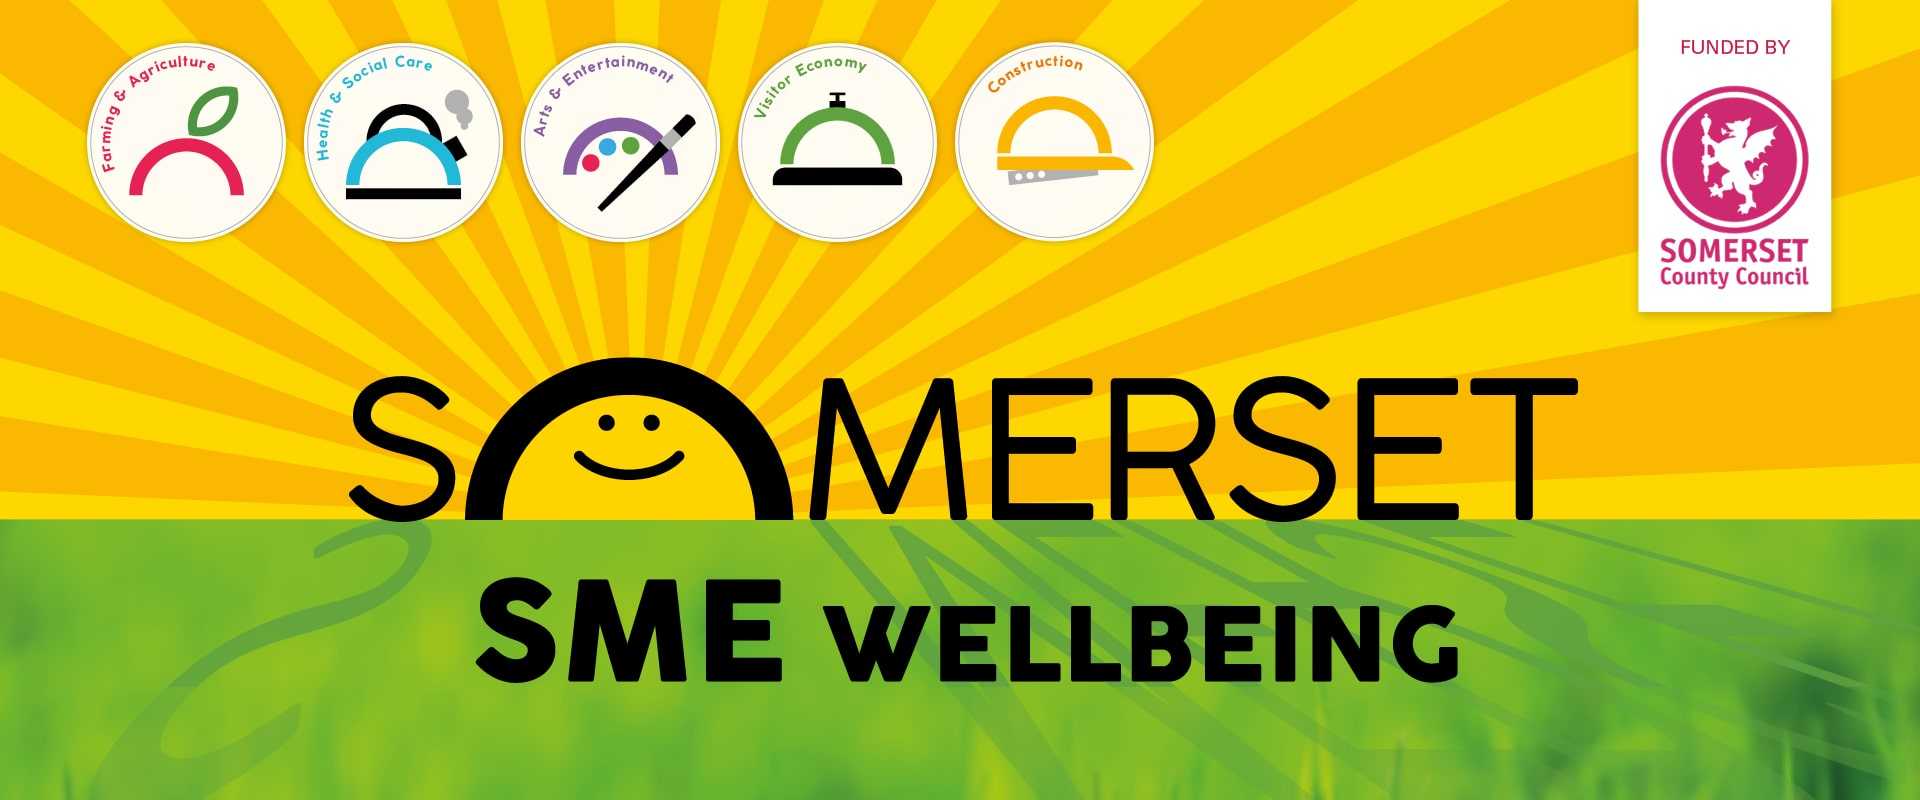 SME wellbeing pledge (002)